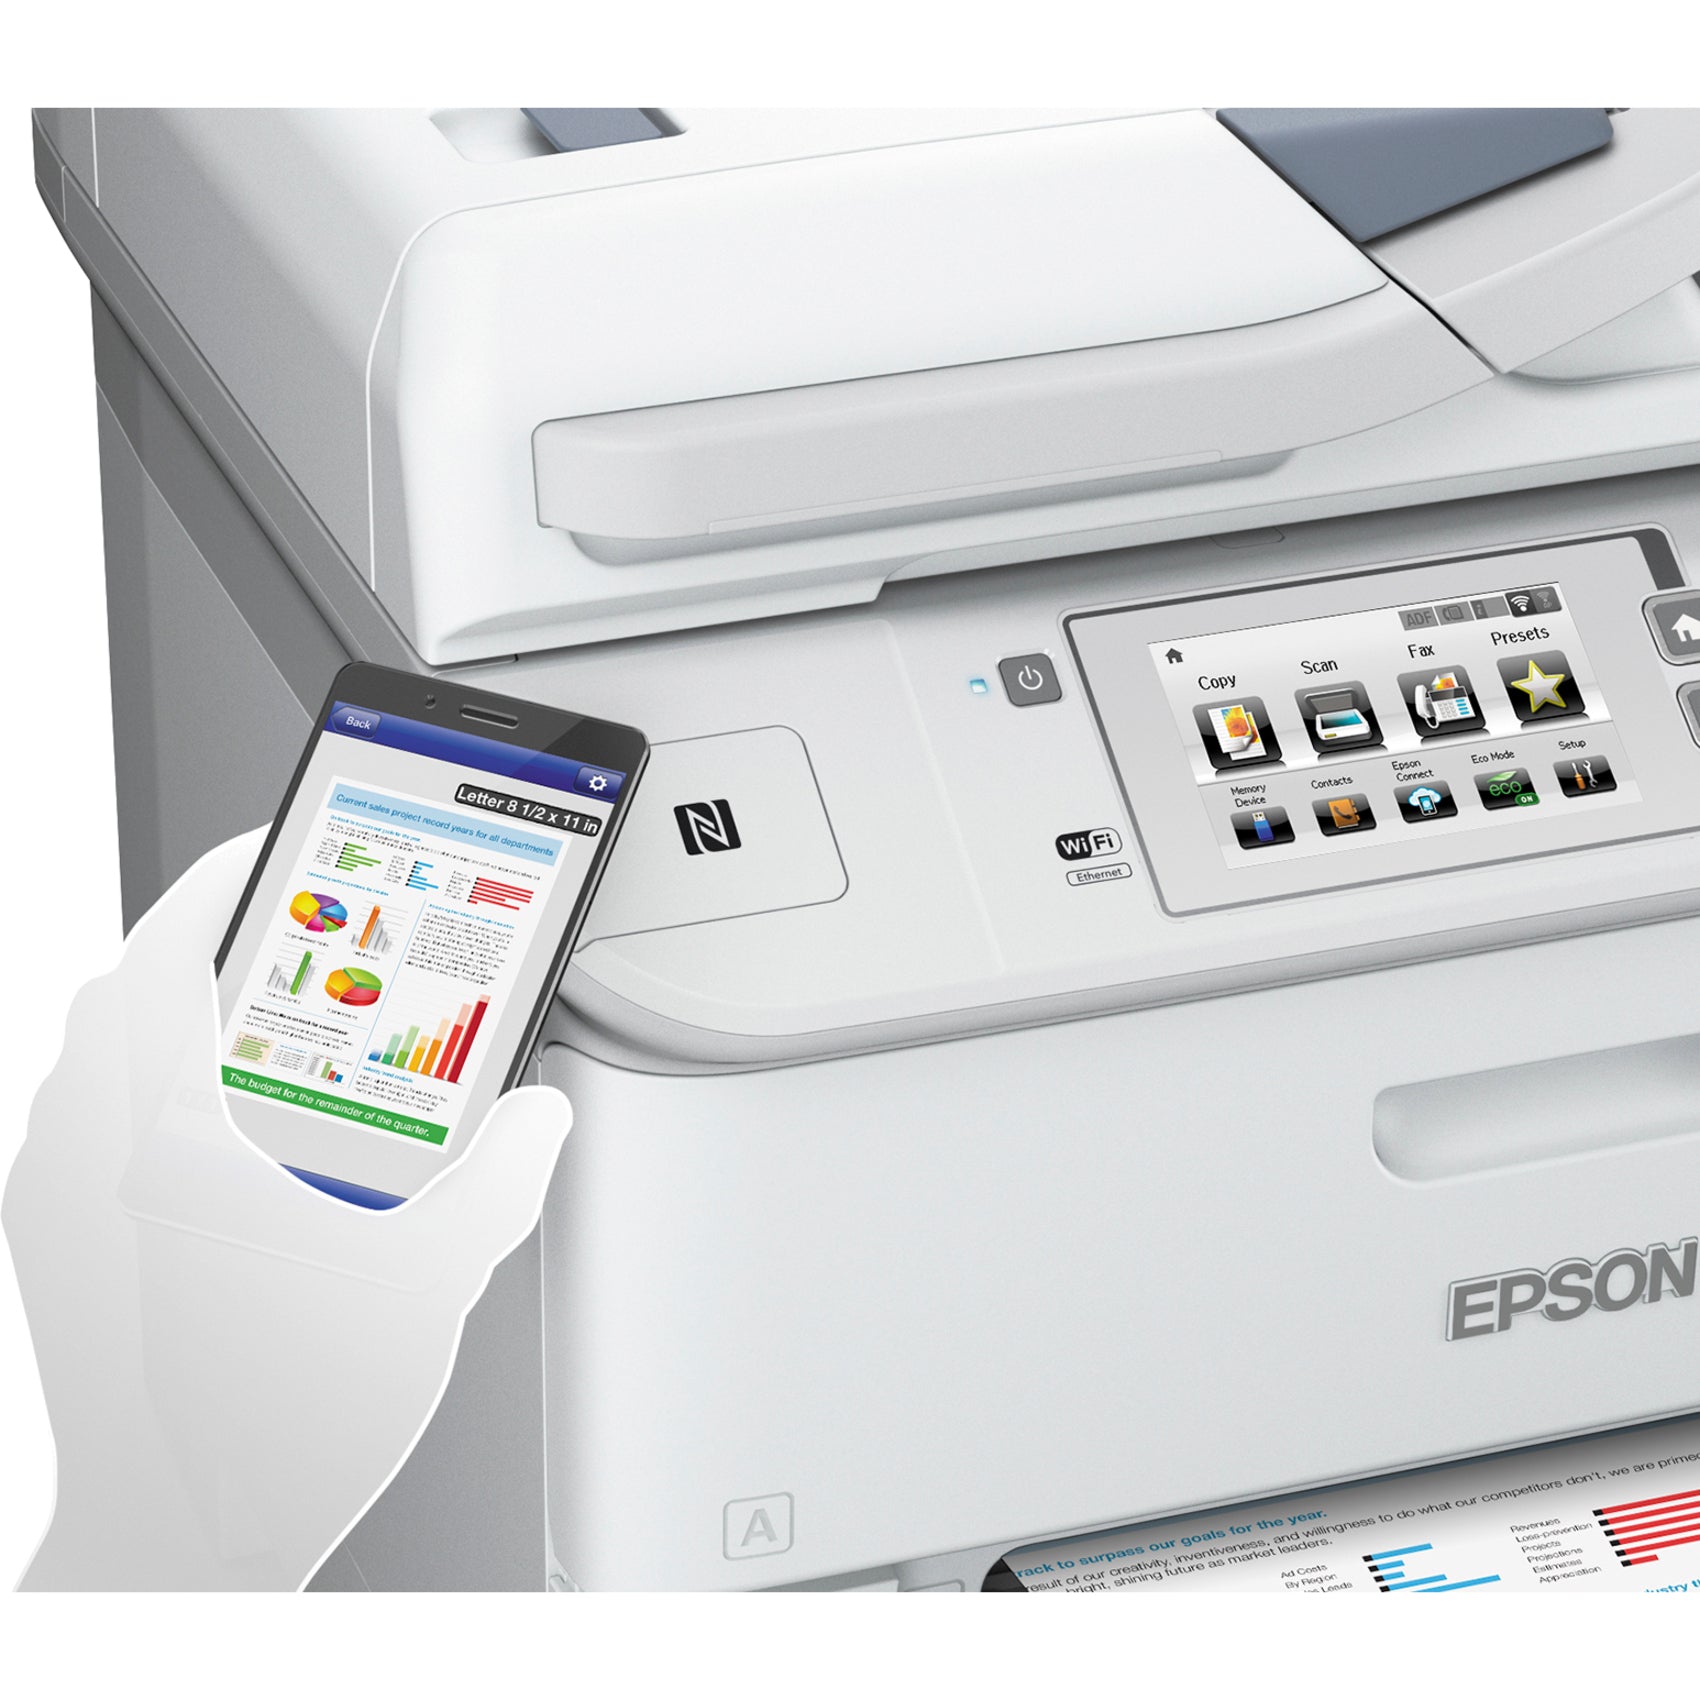 Epson C11CD49201-NA WorkForce Pro WF-6590 Network Multifunction Color Printer, Wireless, Duplex Printing, 4800 x 1200 dpi